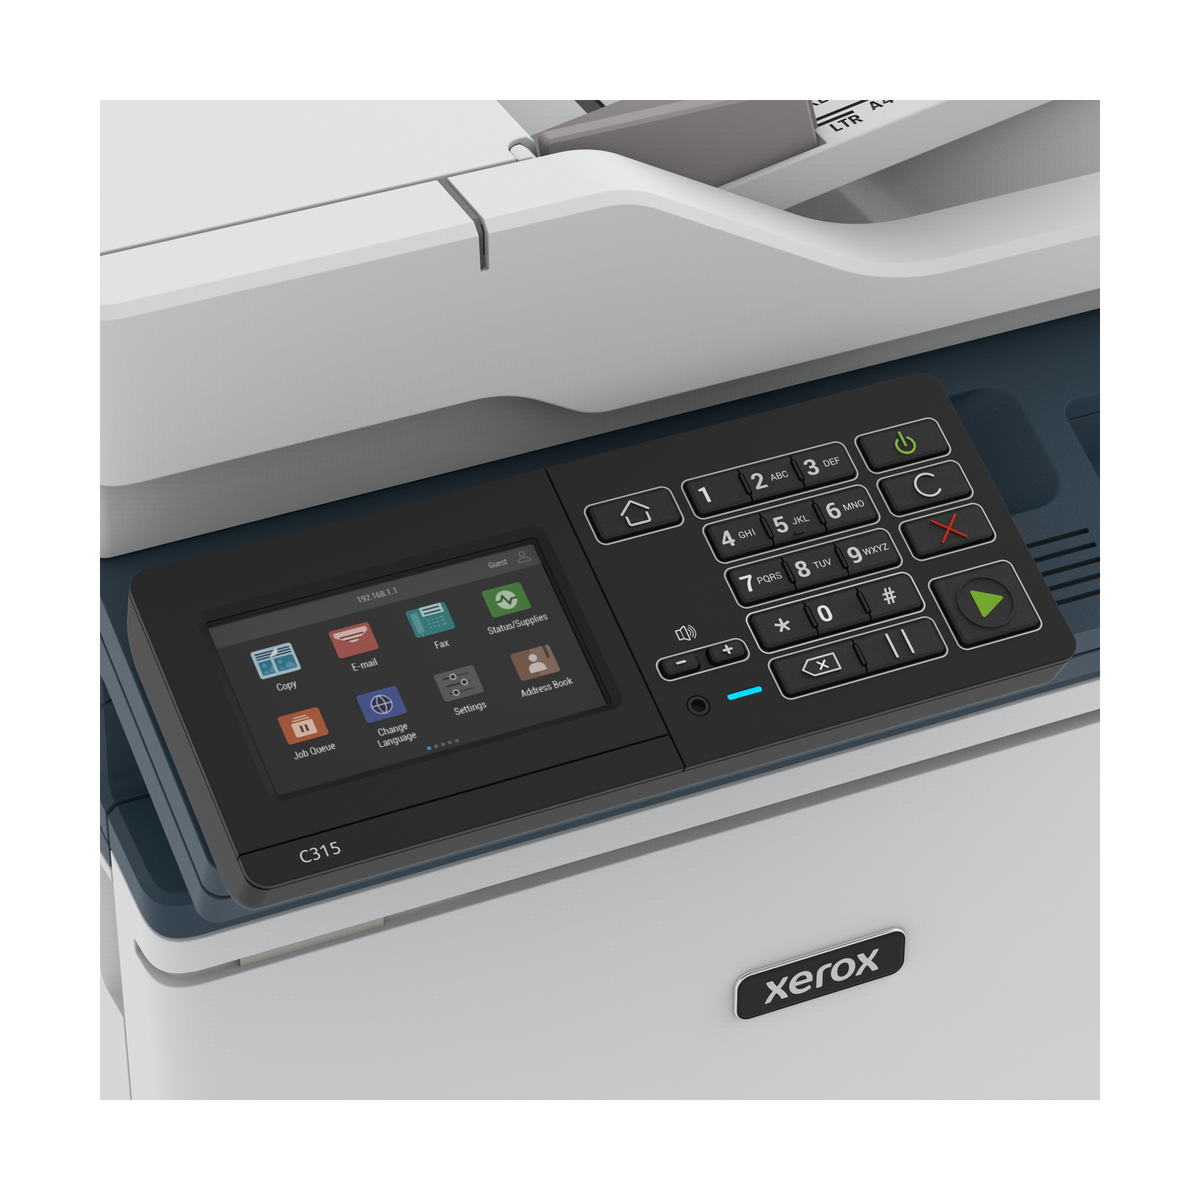 XEROX Xerox C315 Drucker Laser Drucker COLOR Multifunktionsgeräte MULTIFUNCTION WLAN PRINTER printer_multifunction - und